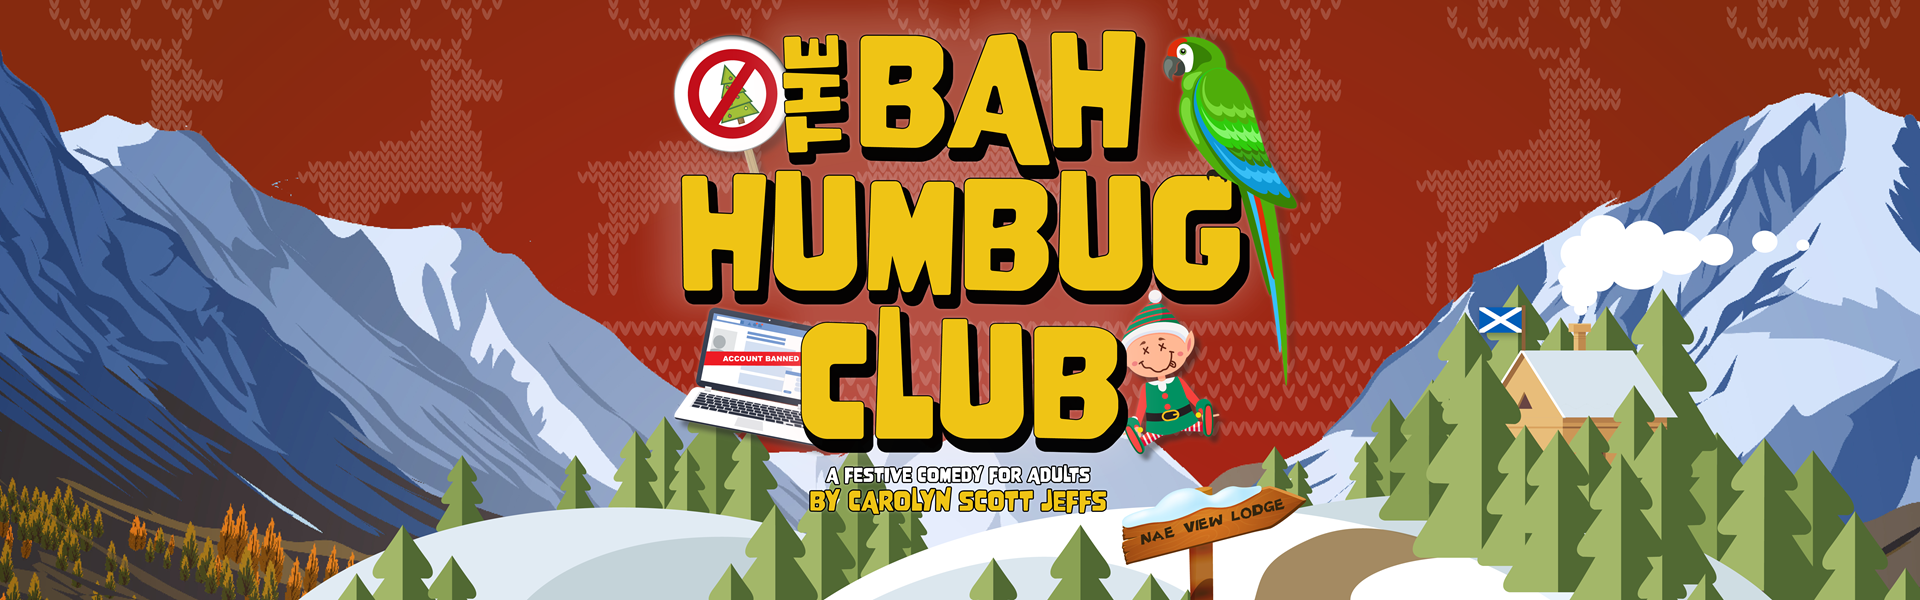 The Bah Humbug Club